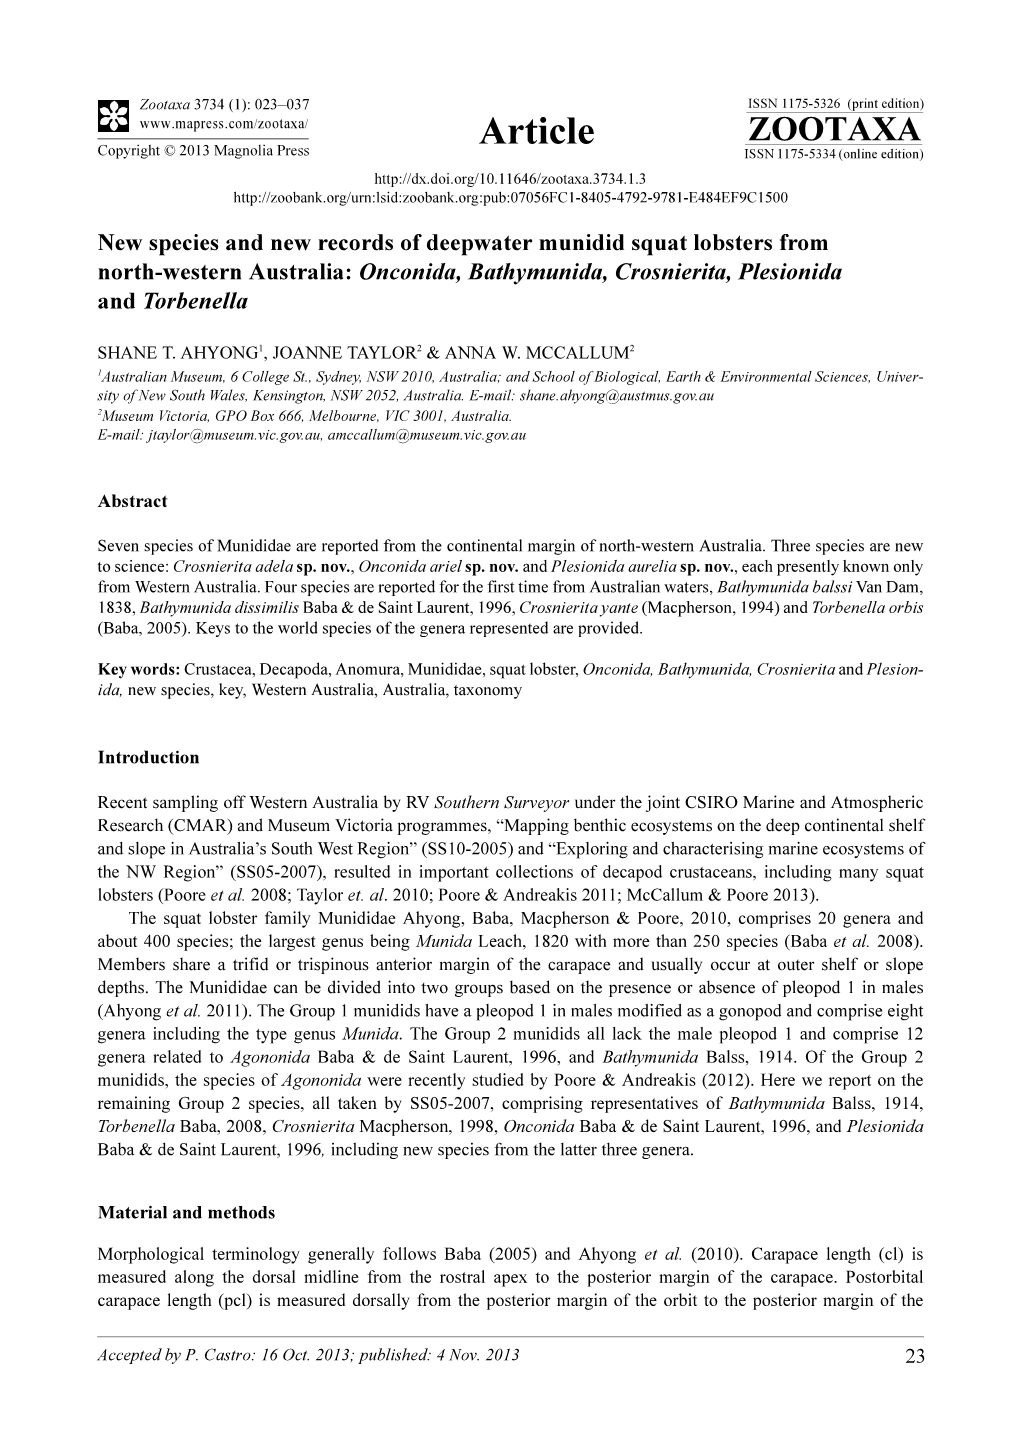 New Species and New Records of Deepwater Munidid Squat Lobsters from North-Western Australia: Onconida, Bathymunida, Crosnierita, Plesionida and Torbenella